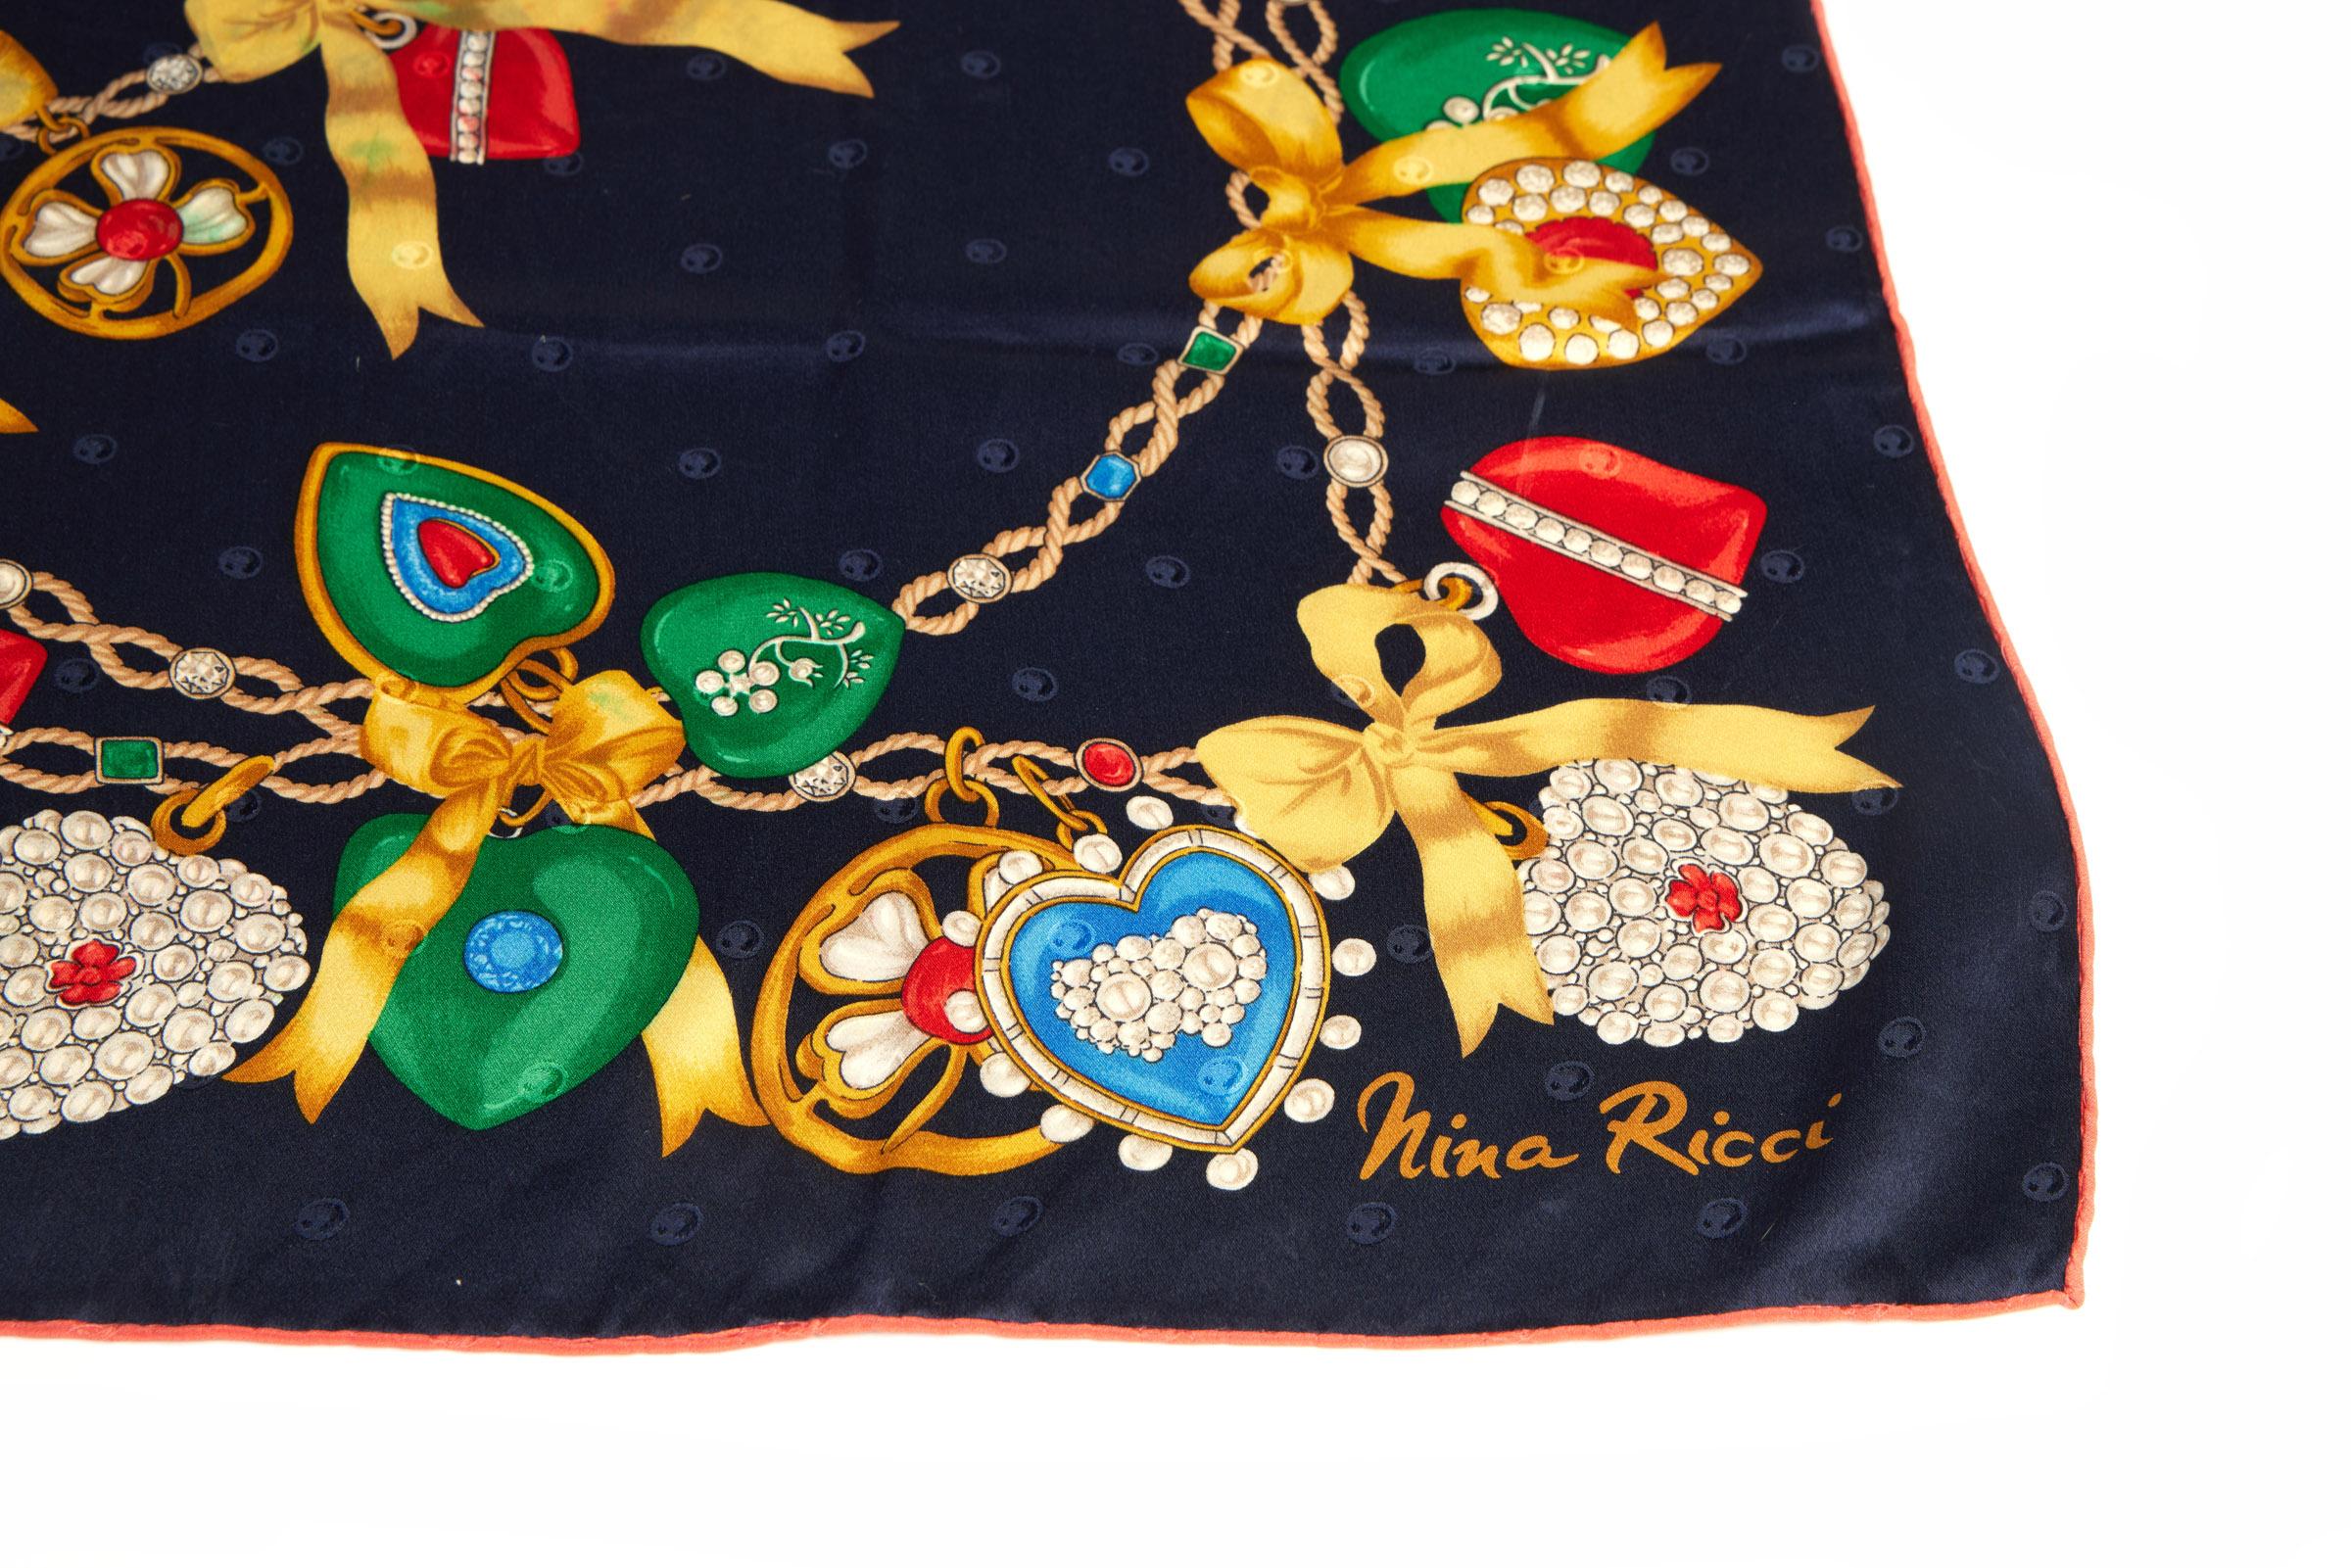 Nina Ricci navy blue silk scarf with jewel charms design. Hand rolled edges.
